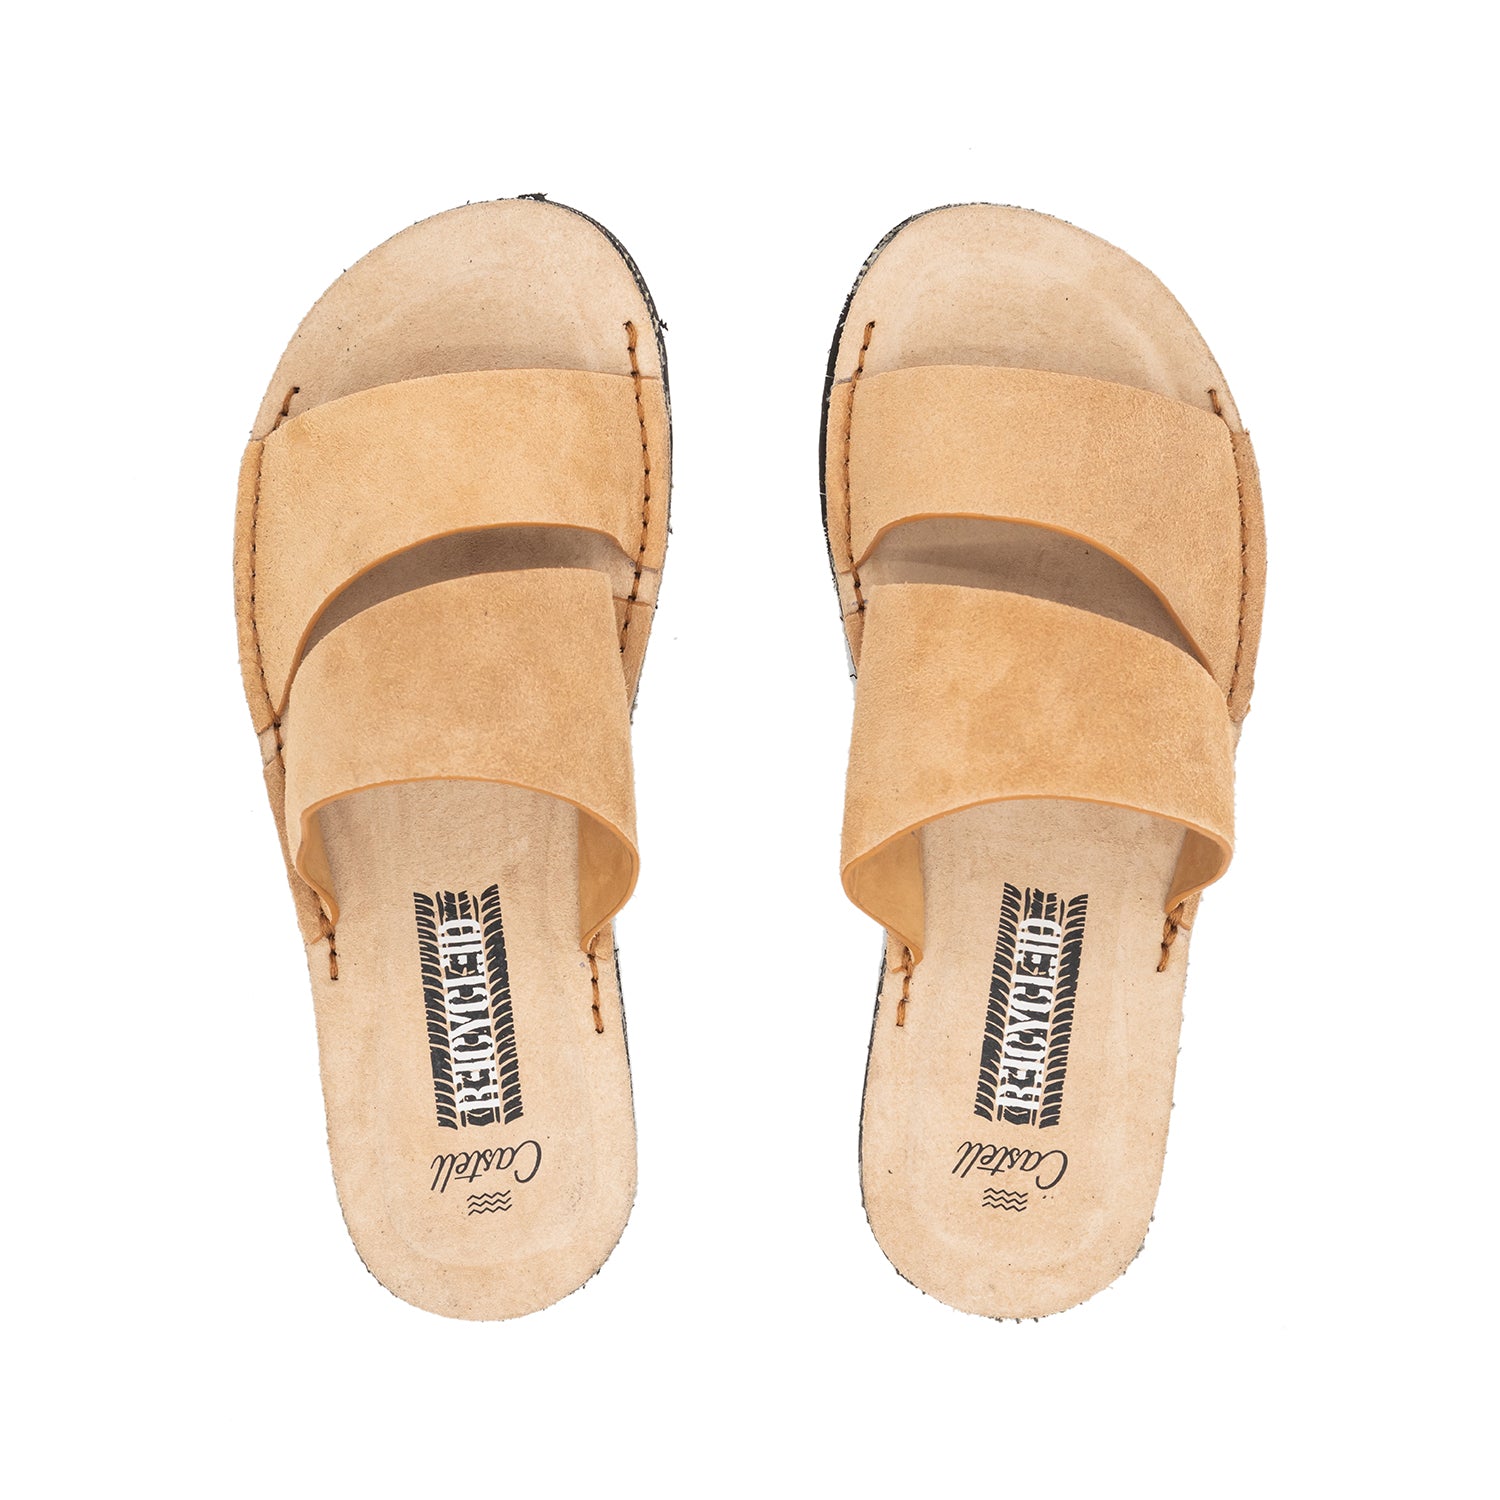 Plain Leather Sandal For Women - Cala Mitjana Bahia